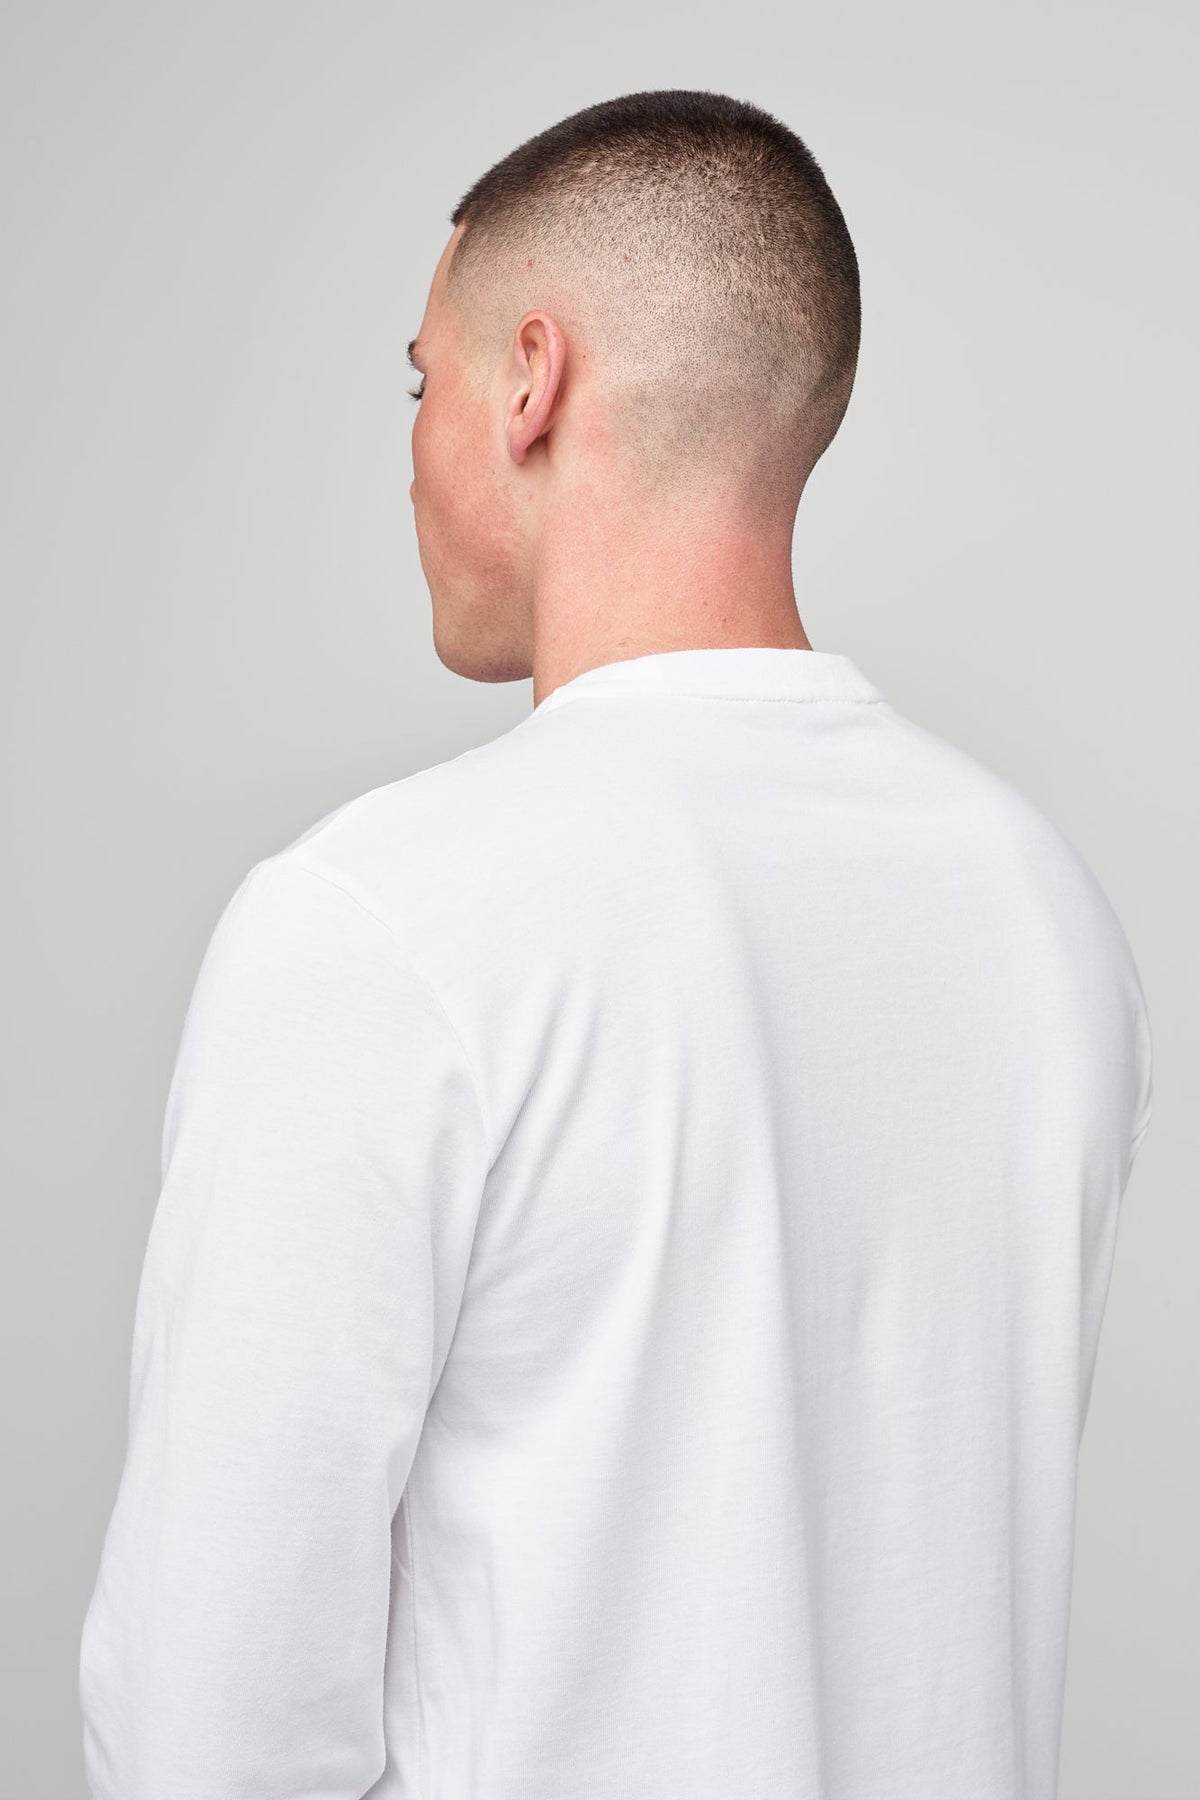 
            Brunet, white male wearing long sleeve t-shirt white 